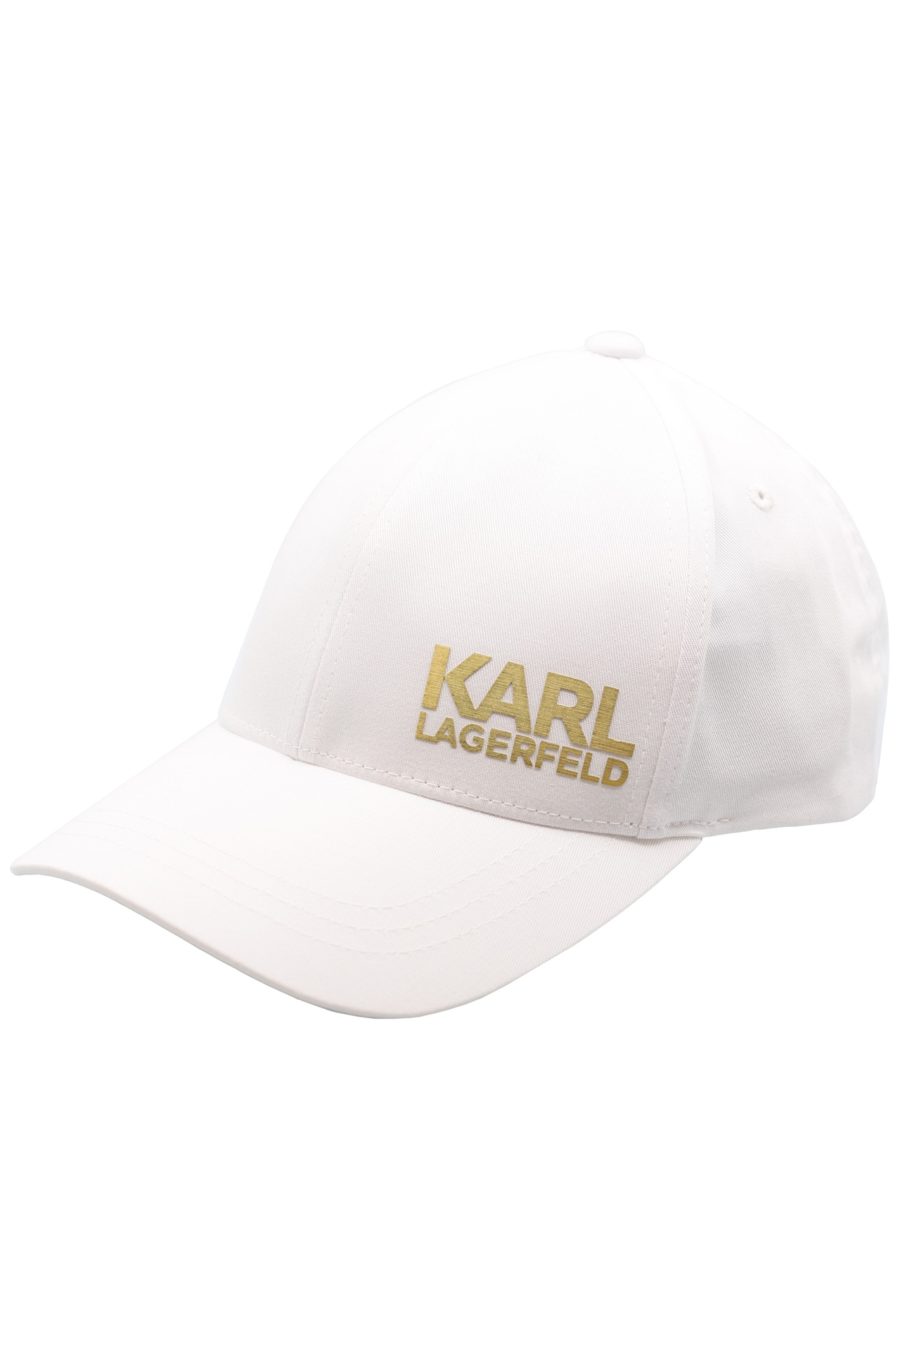 Weiße Mütze mit goldenem "Karl Legerfeld" Logo - eae0c23135dbb793cd228dfcdd72b7c1e031bd19